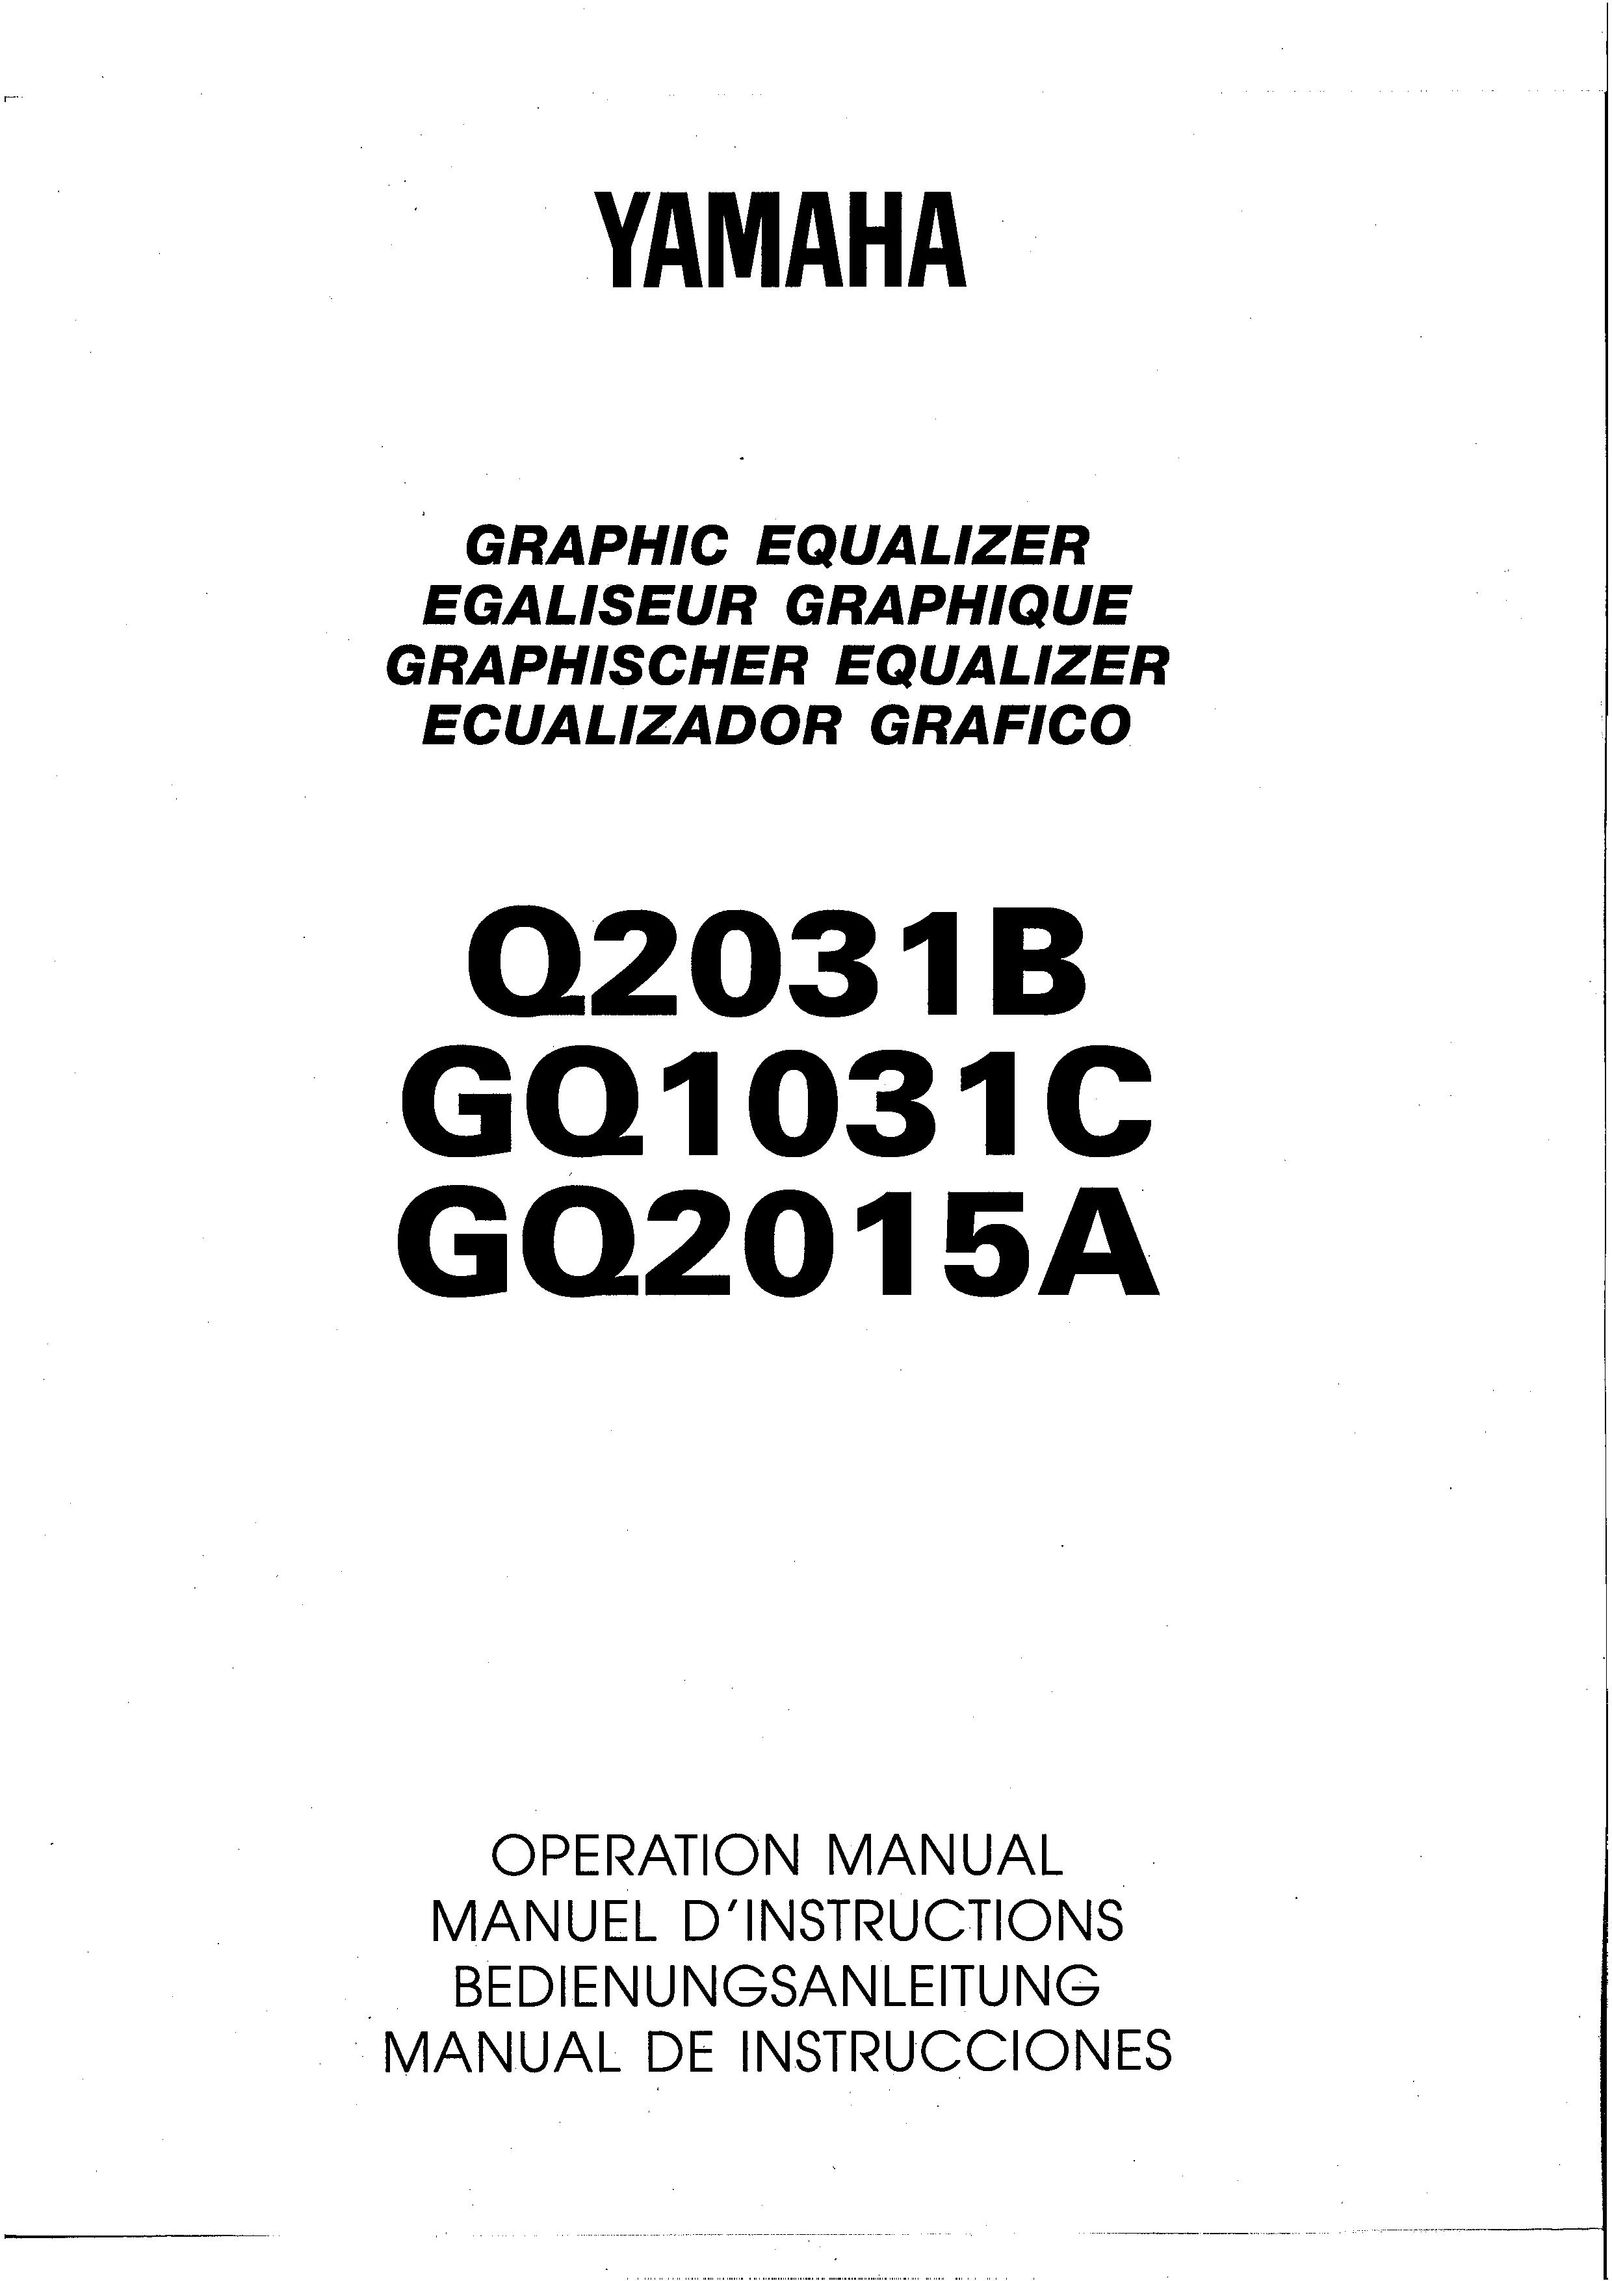 Yamaha GQ2015A Stereo Equalizer User Manual